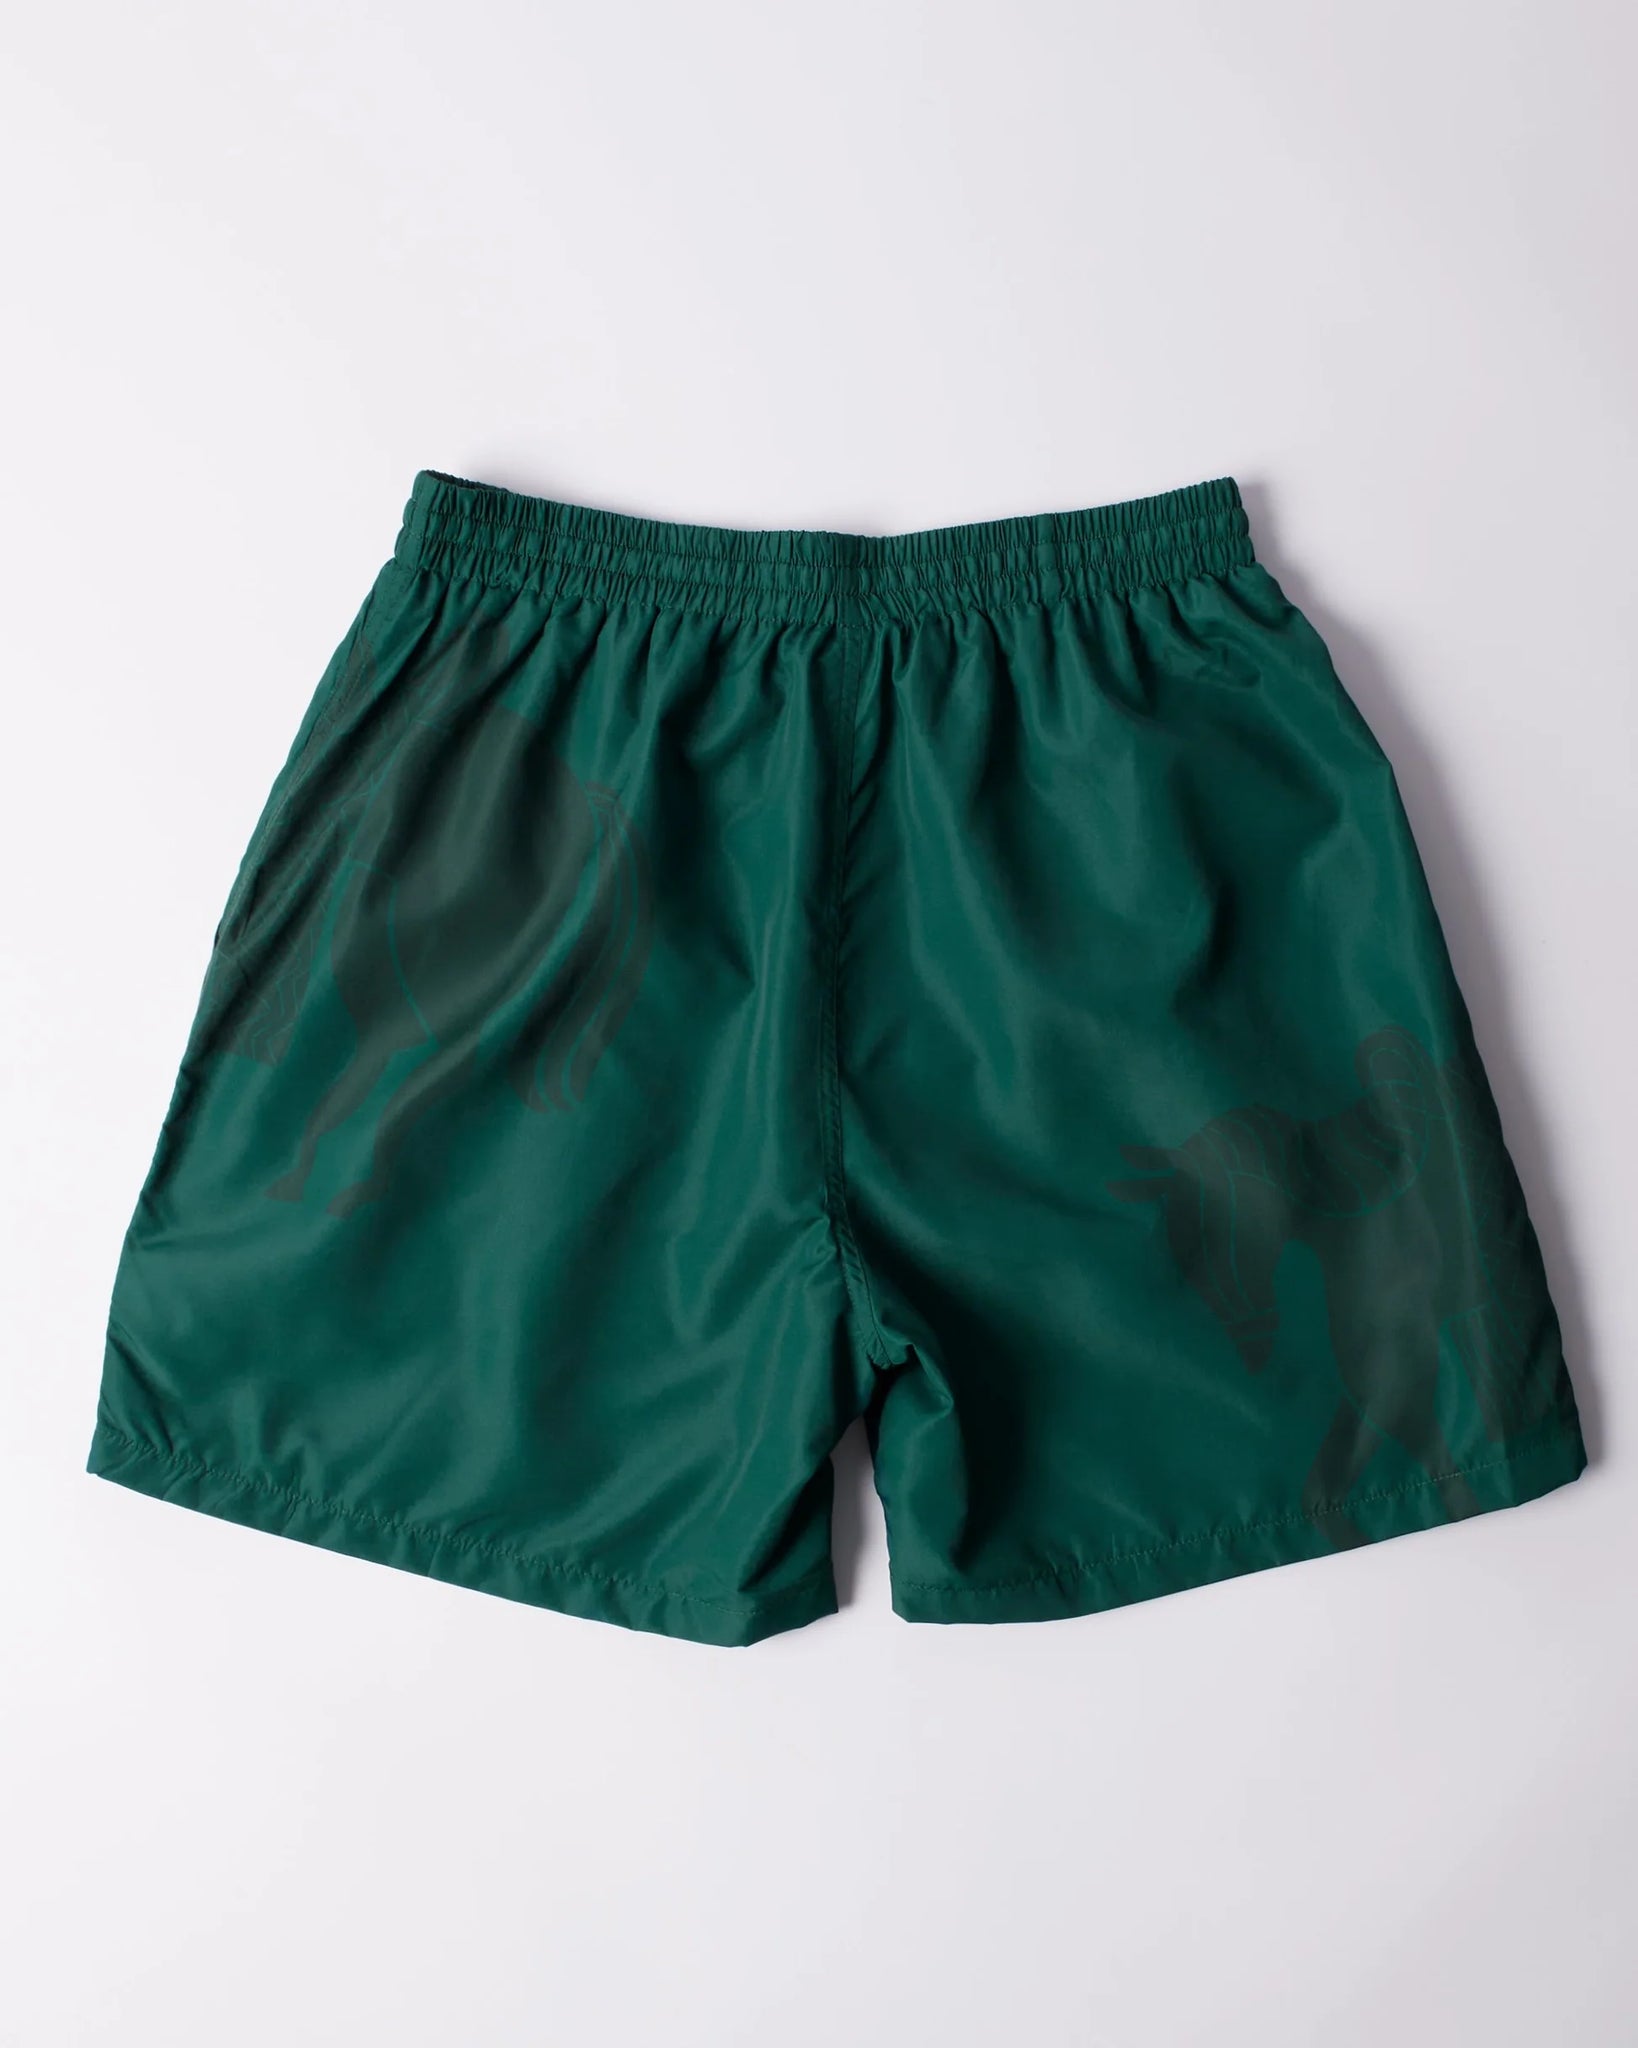 Short horse shorts (pine green)